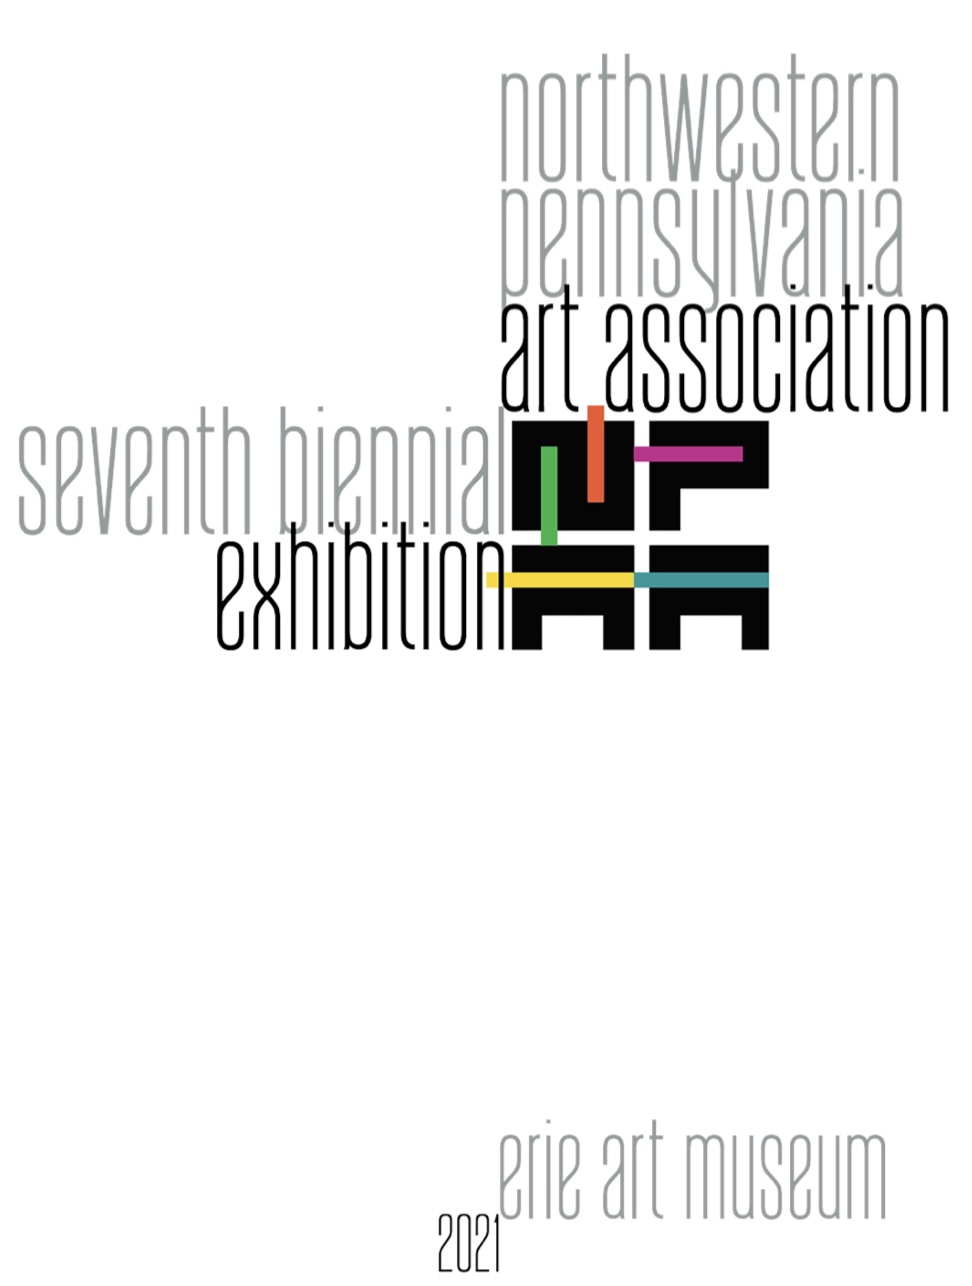 Northwestern Pennsylvania Art Association - Erie Art Museum